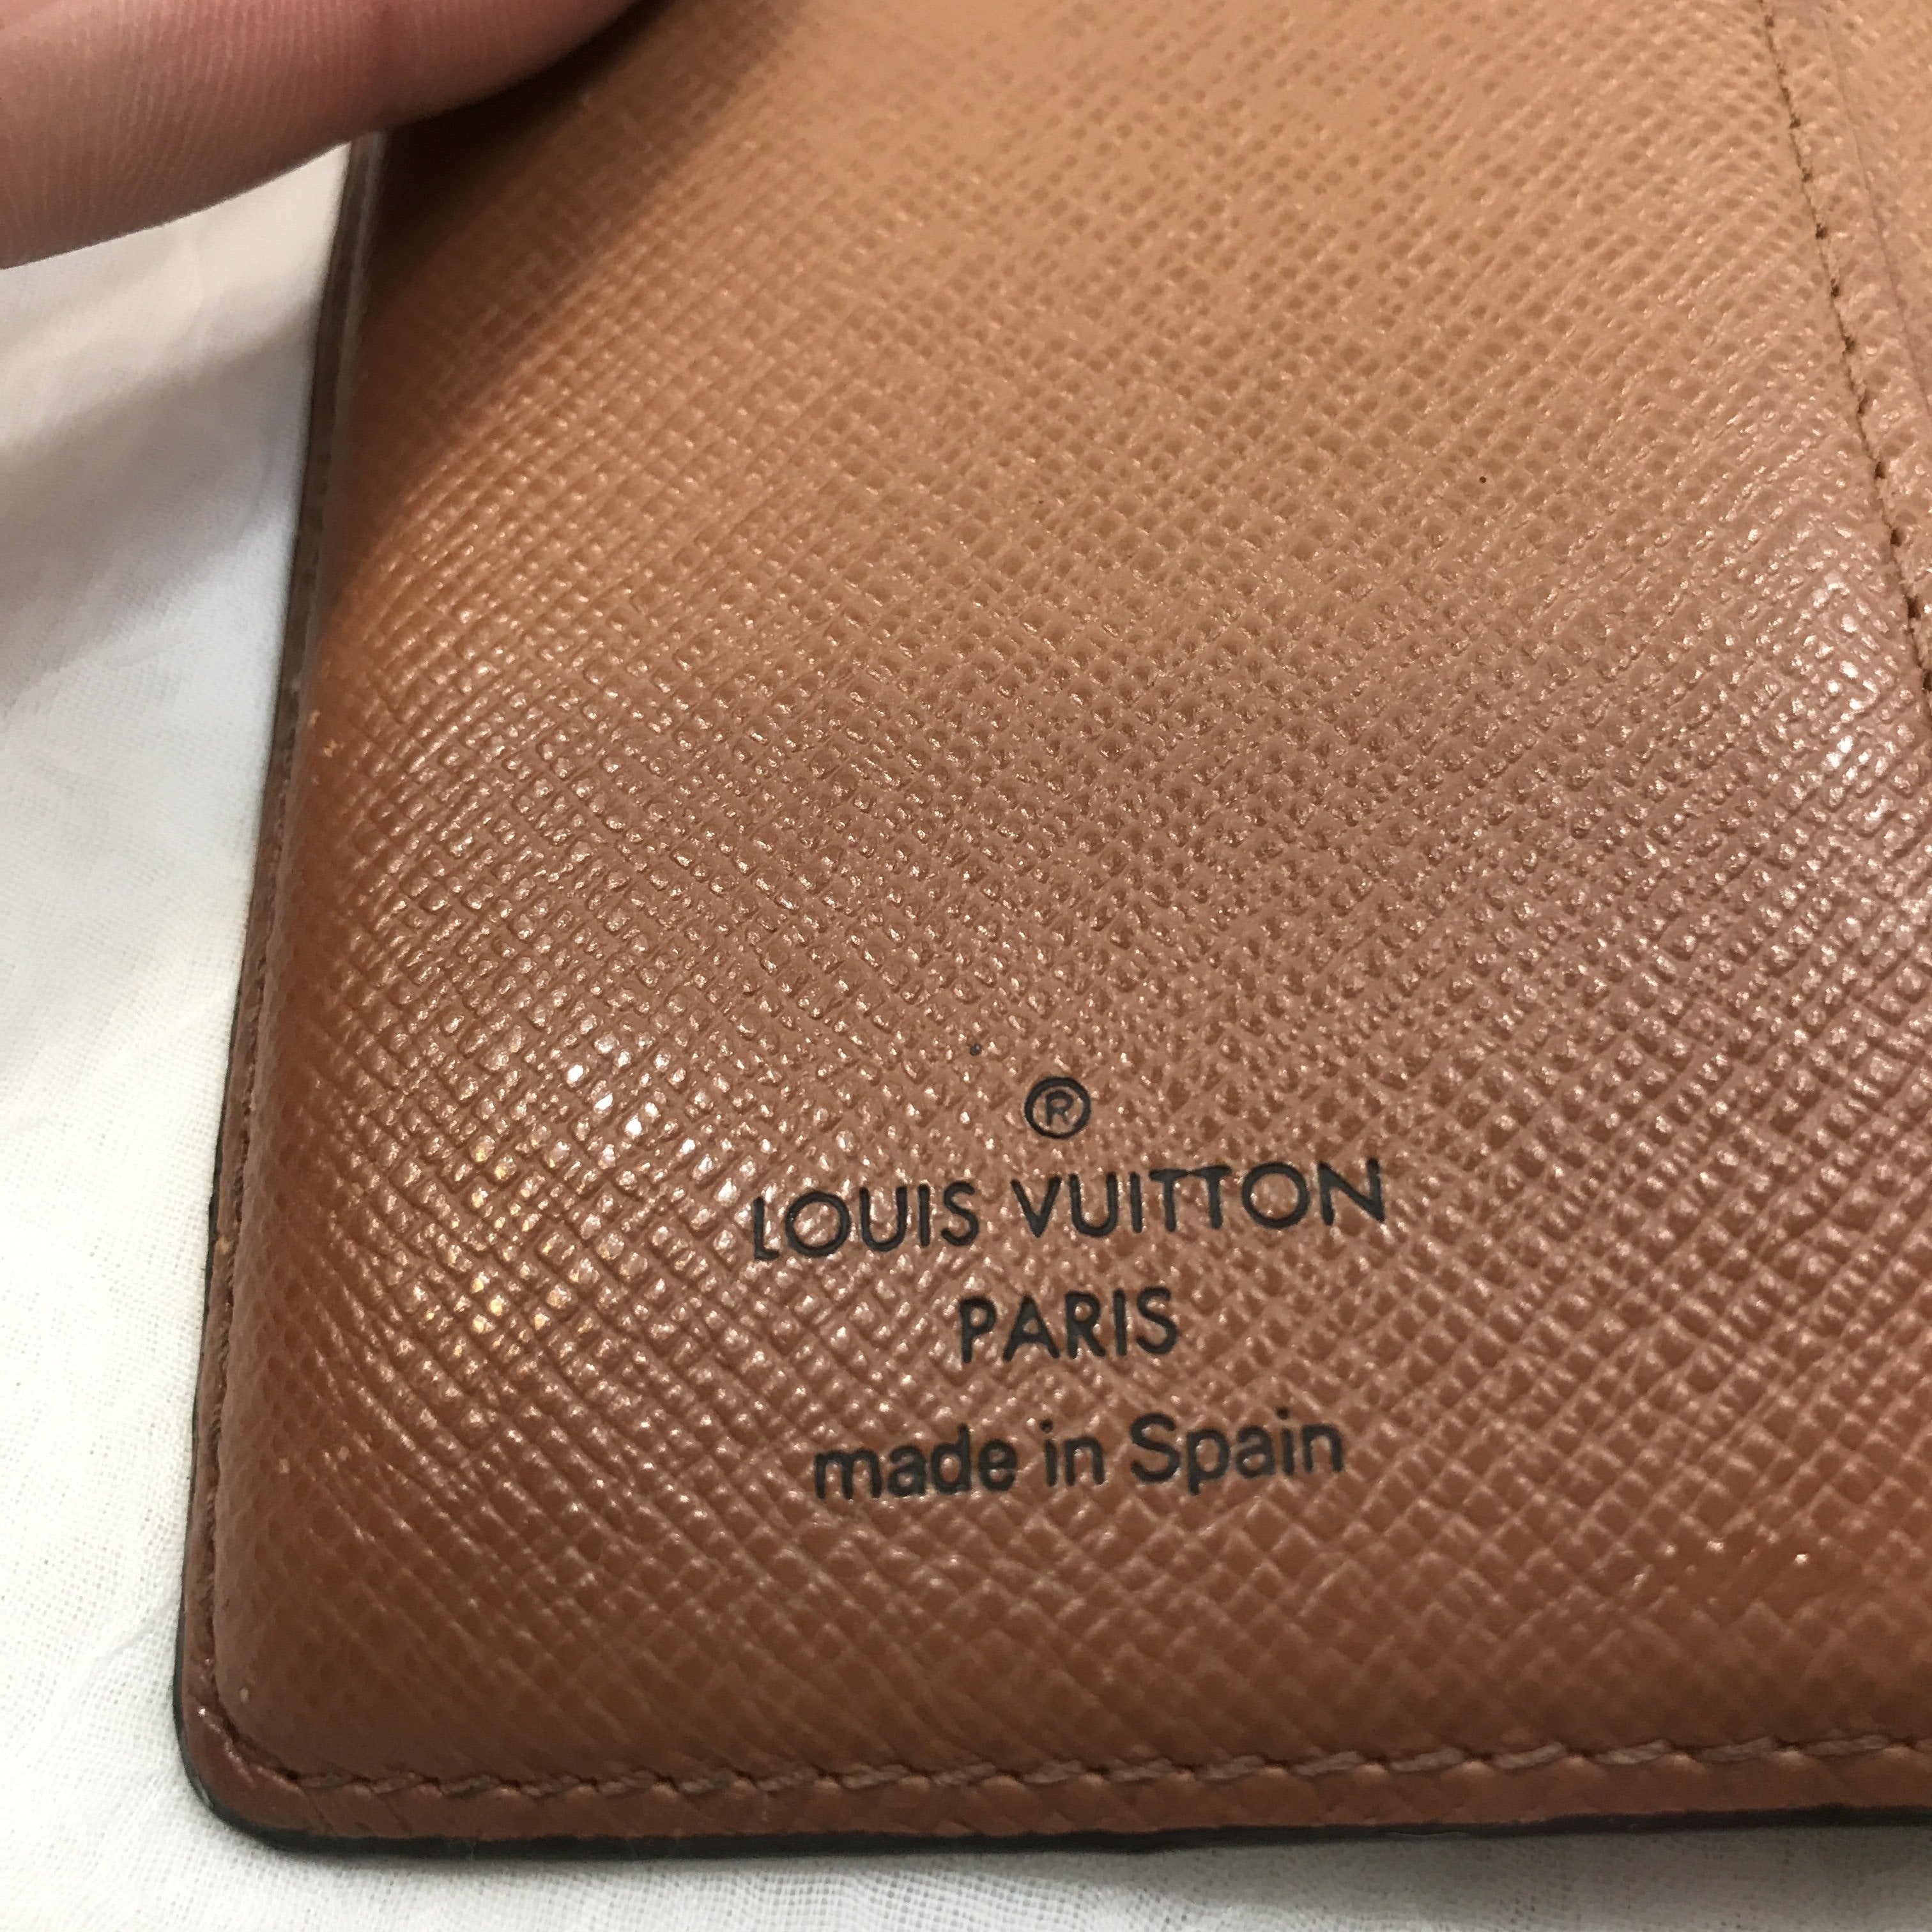 Louis Vuitton Pink Monogram Mini Lin Small Ring Agenda PM Diary Cover 545lvs611